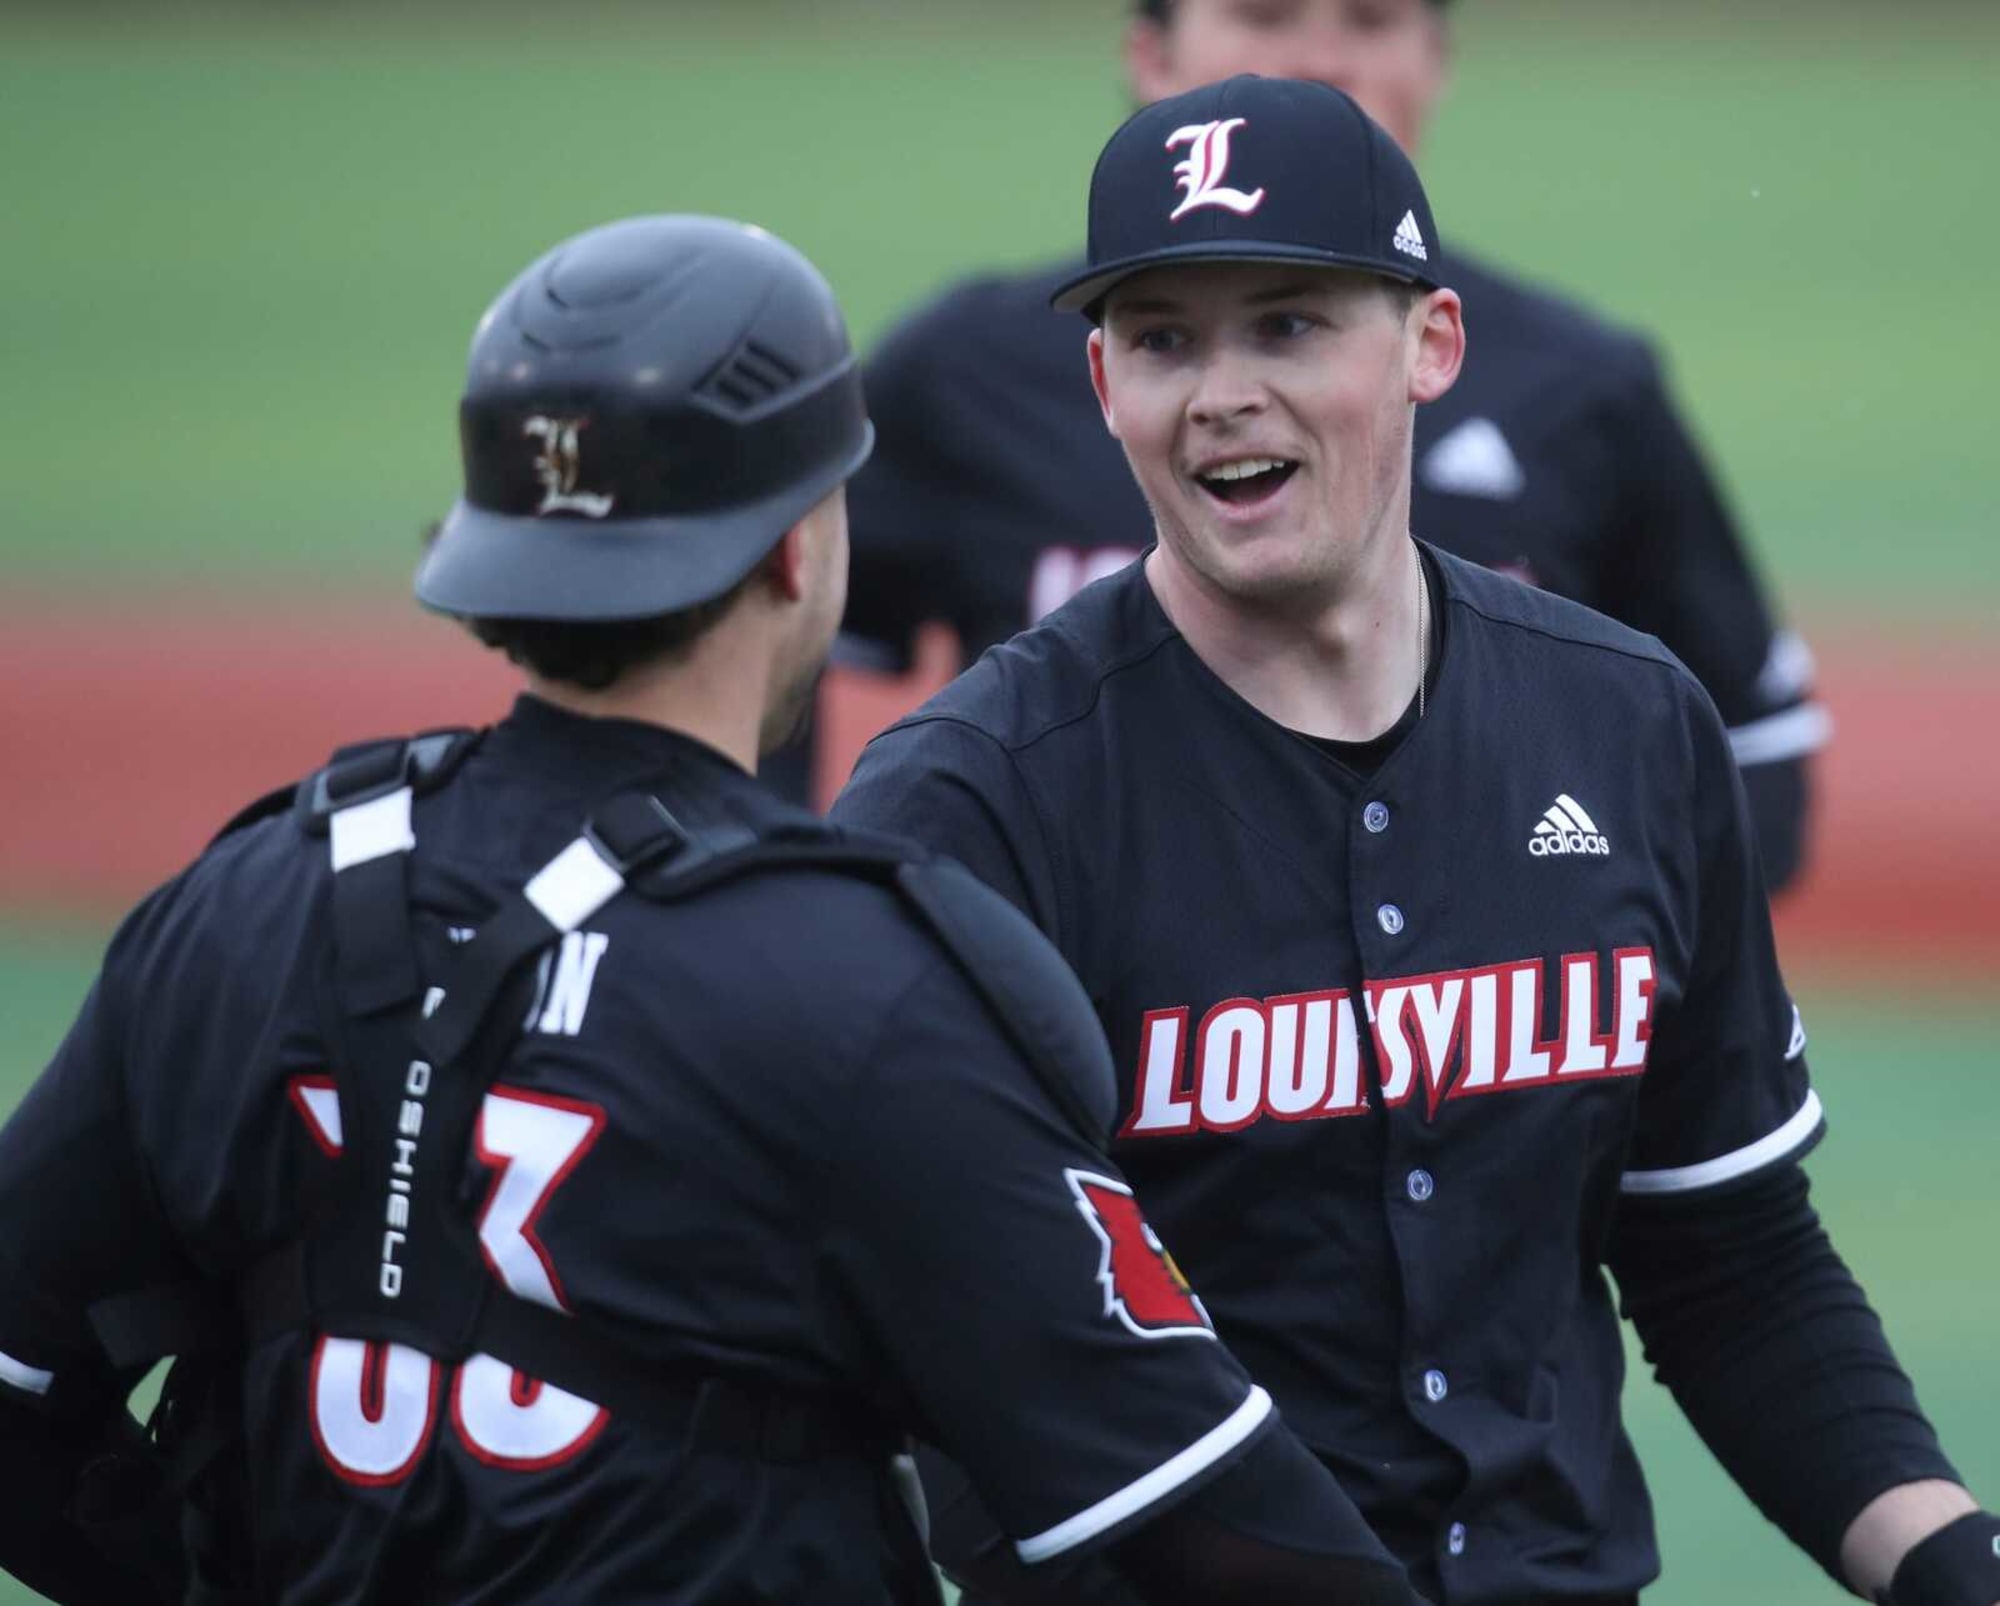 Louisville Baseball Completes Sweep To start 2023 Season